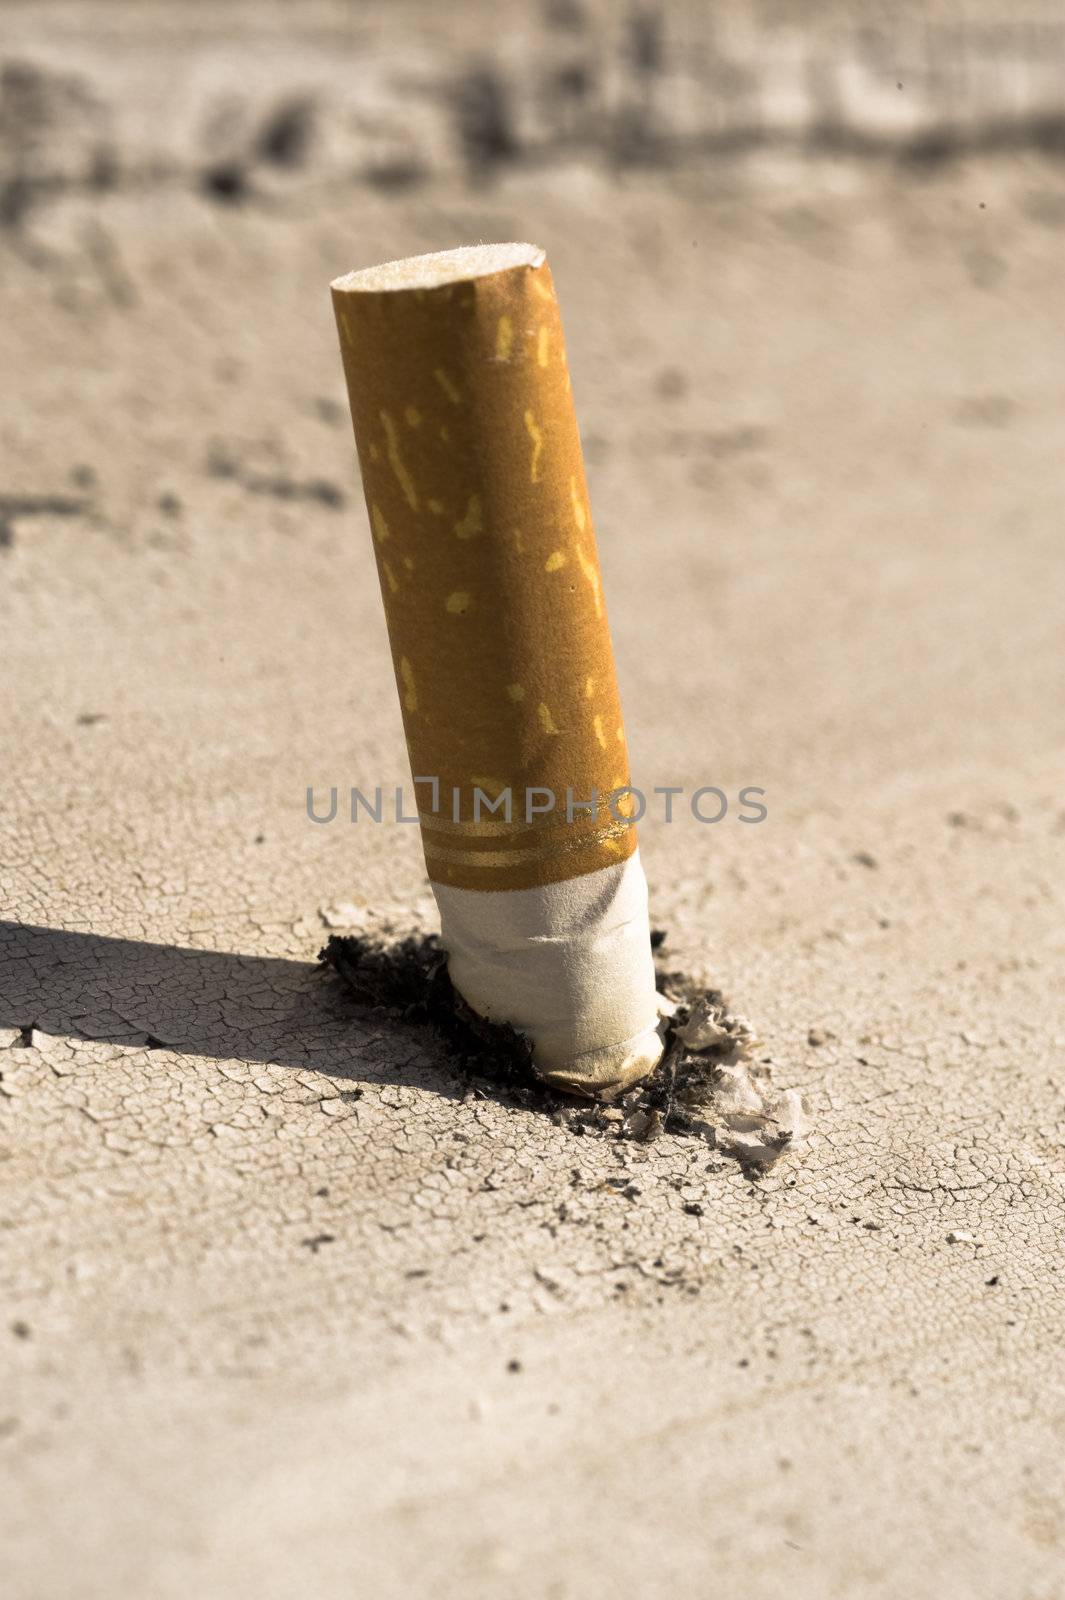 Put out cigarette by Alenmax